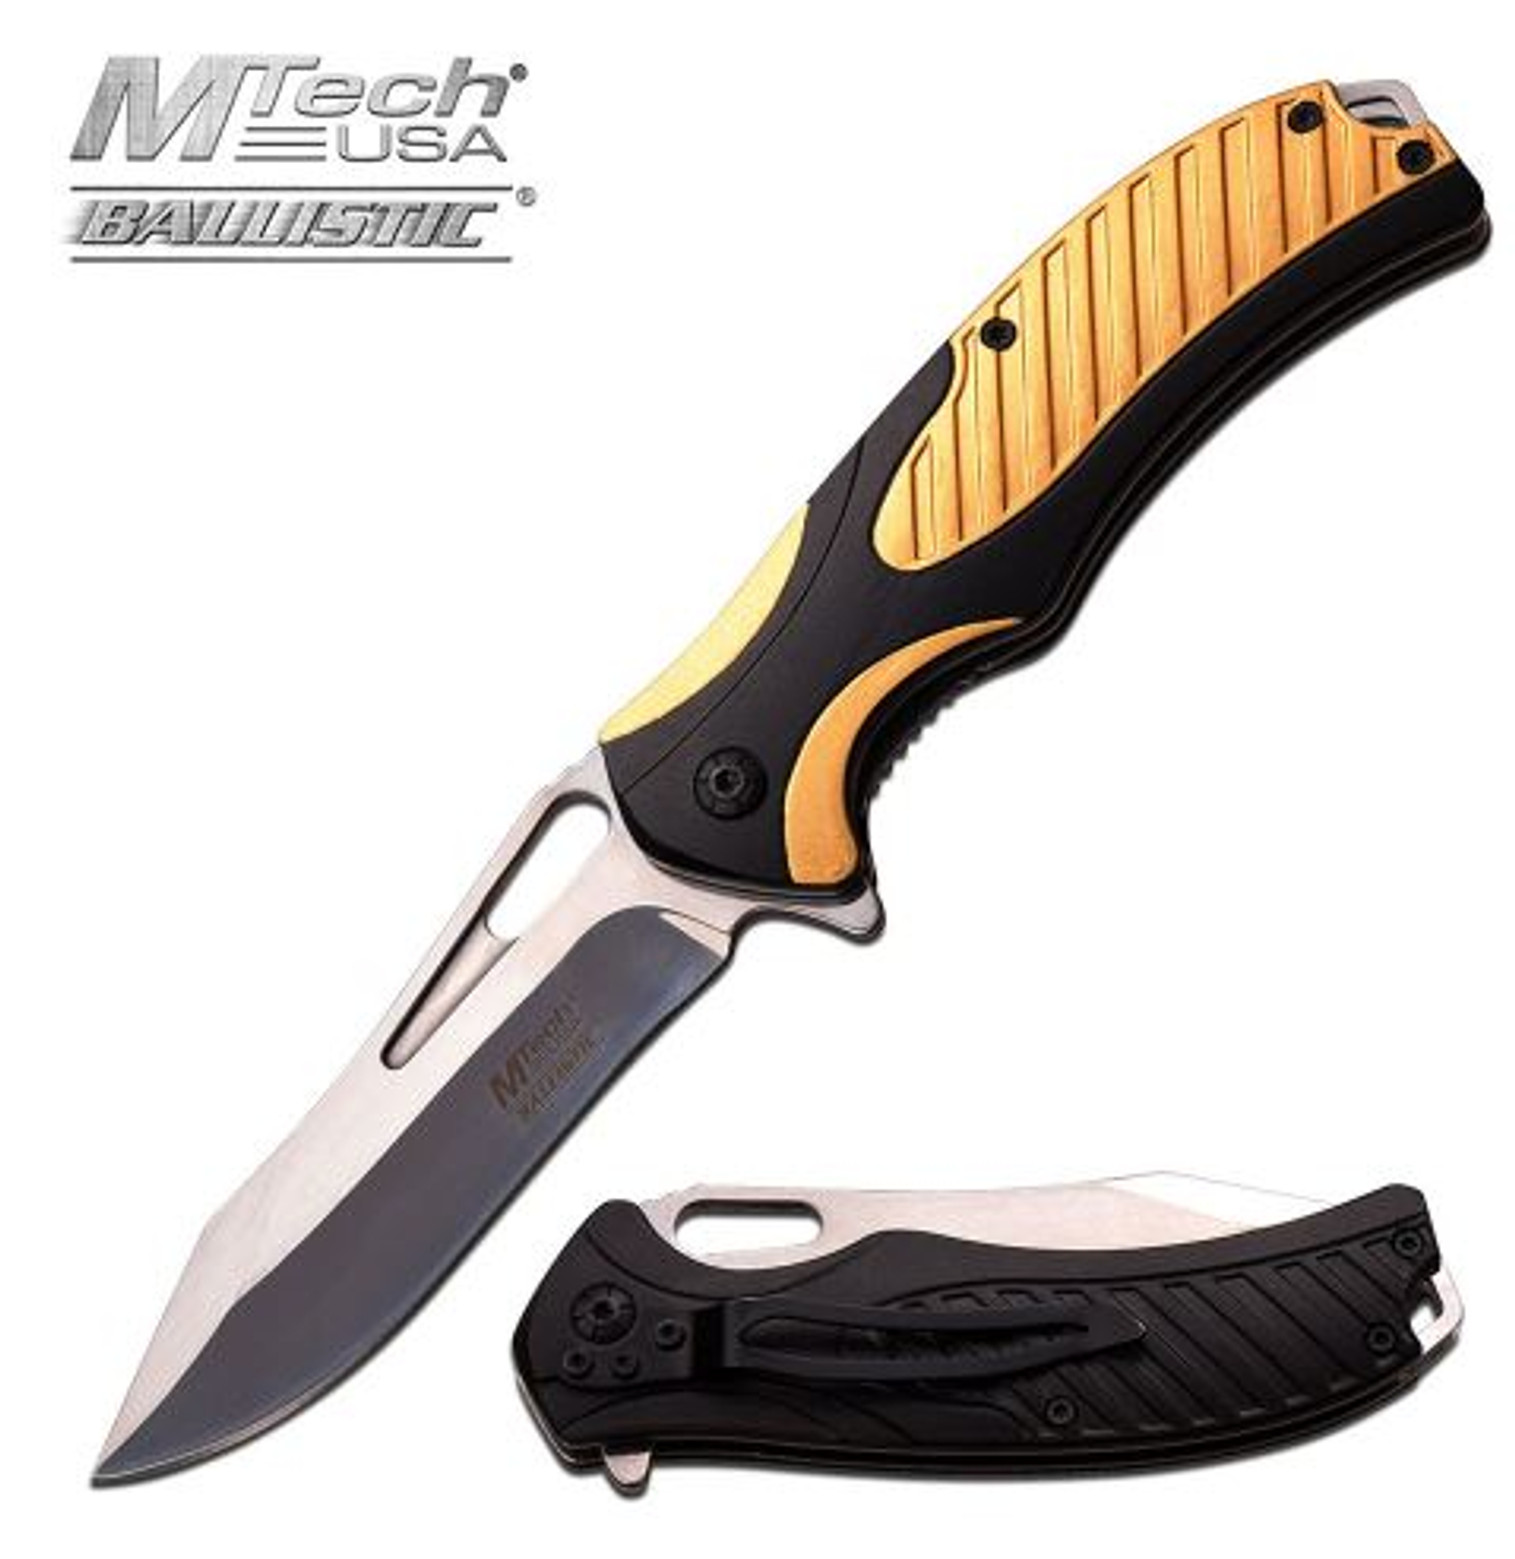 Mtech MTA942GD Folding Knife Assisted Opening